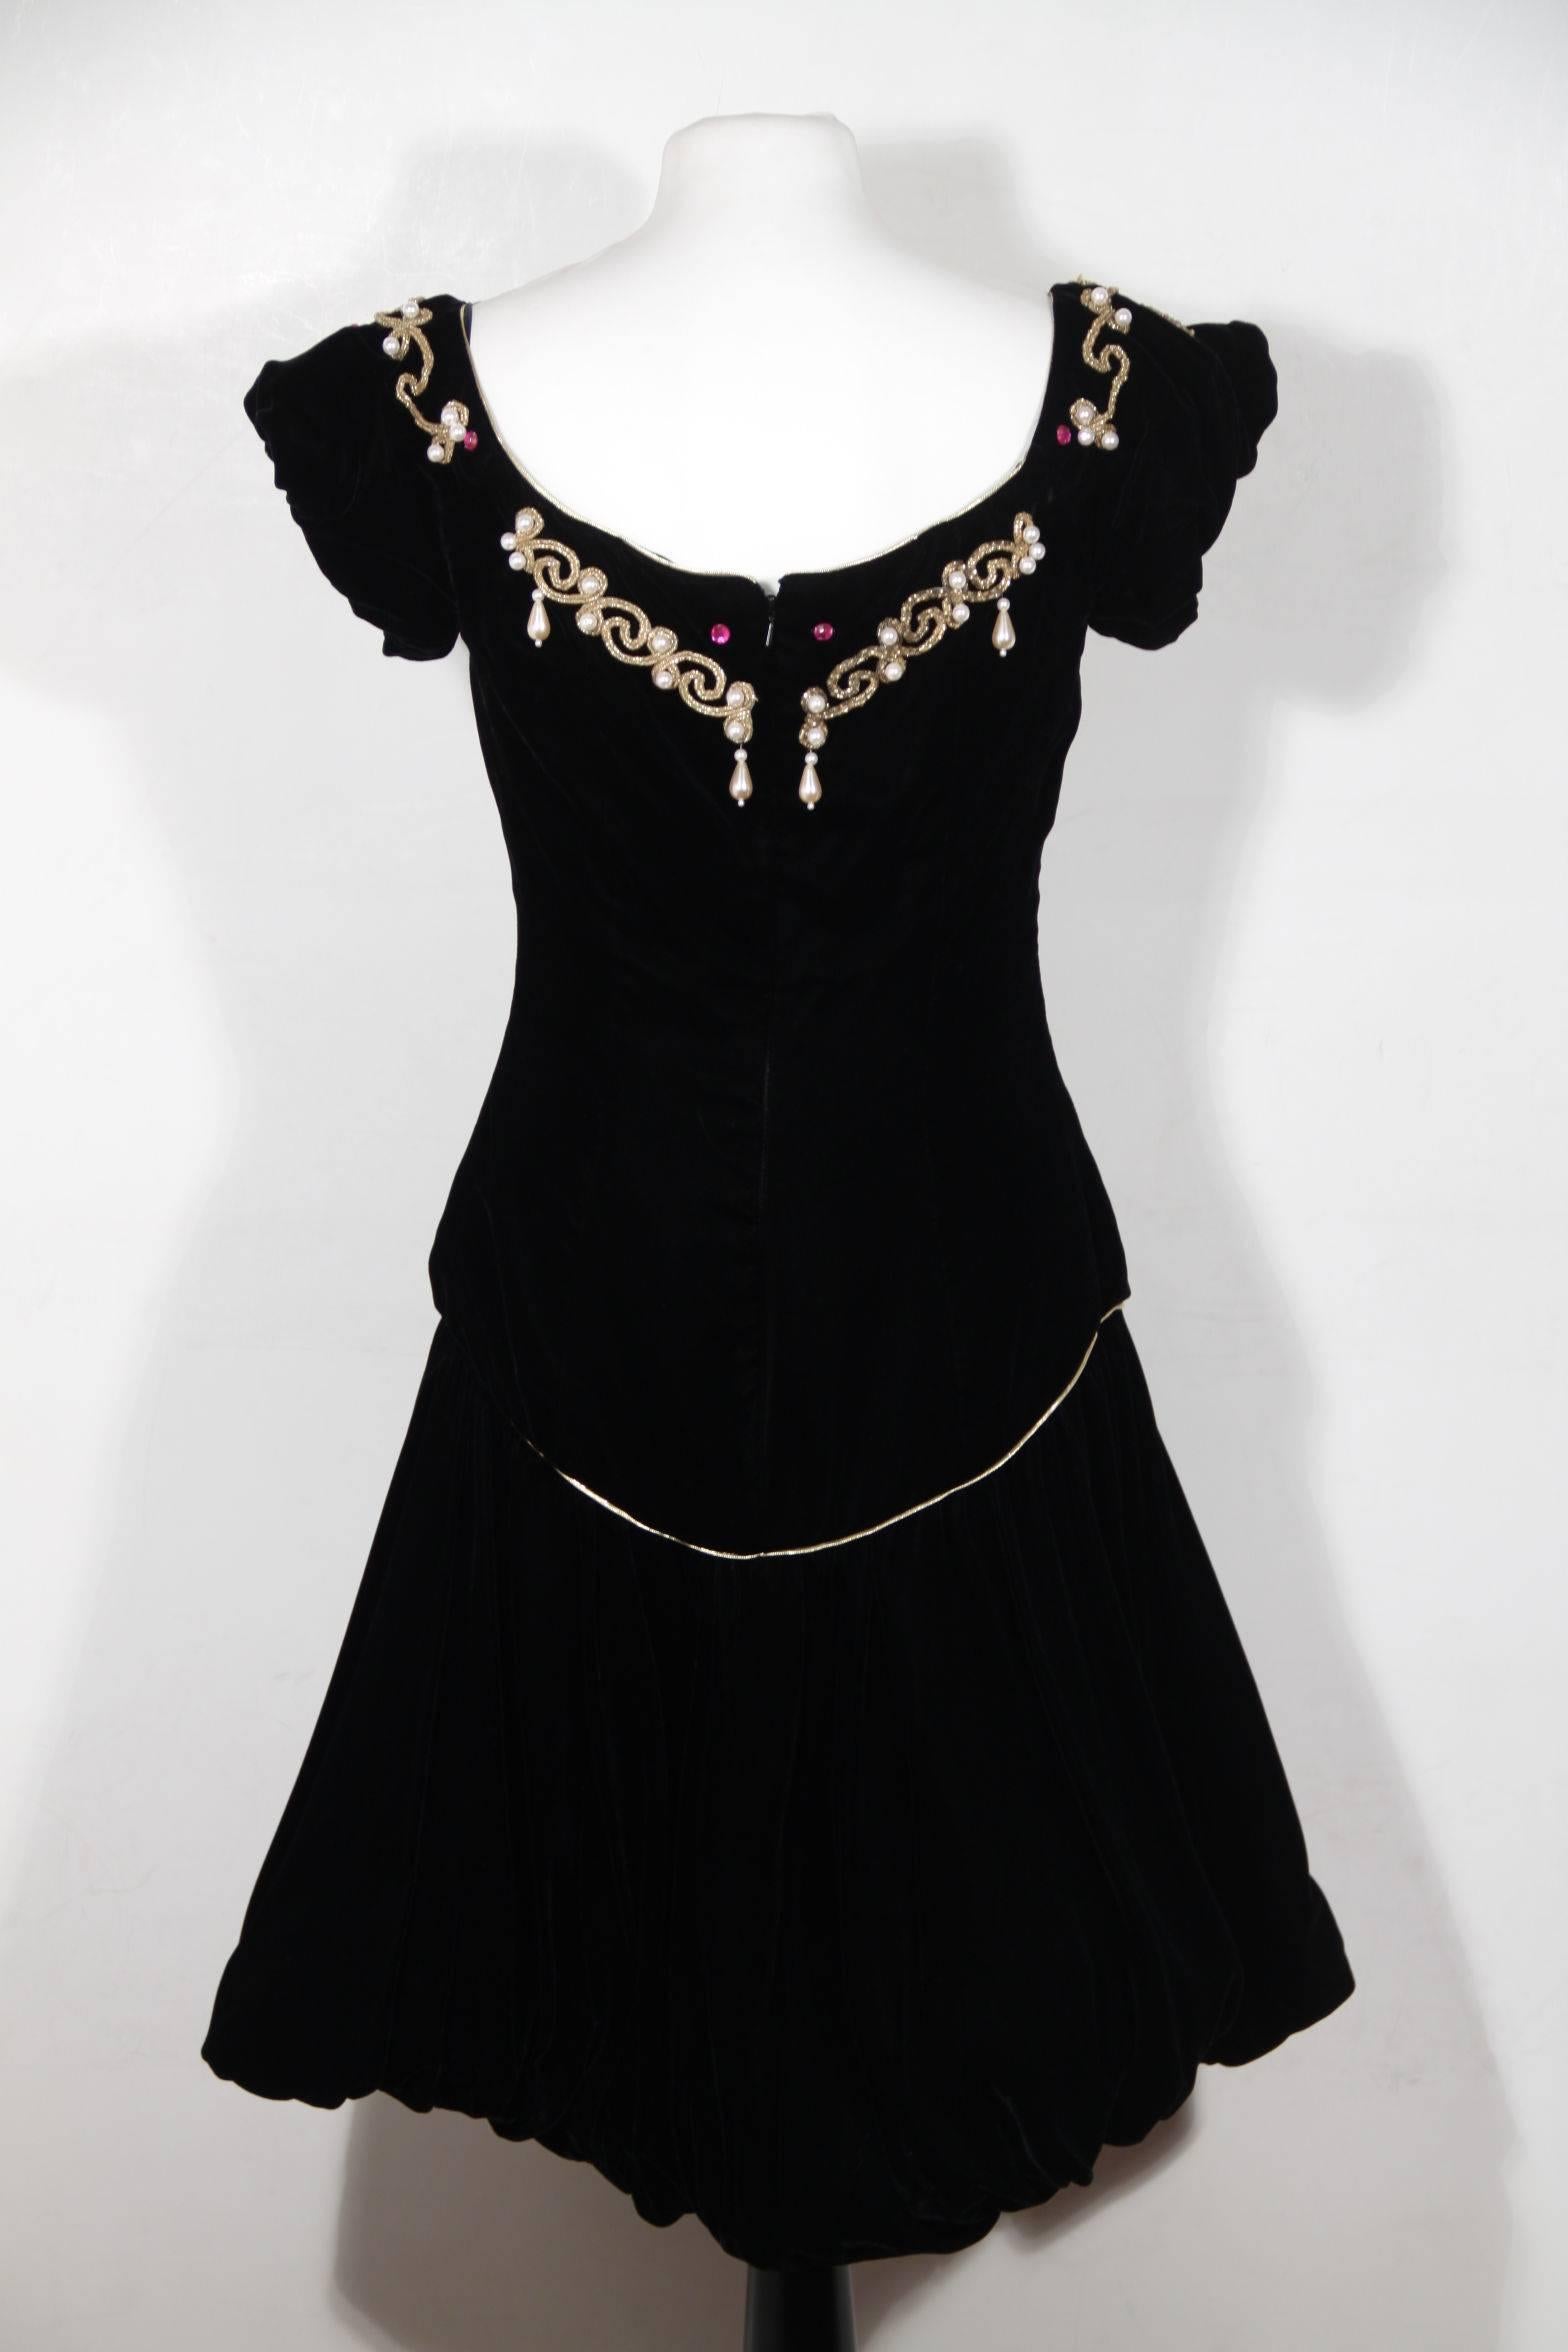 DAVID FIELDEN LONDON Vintage Black Velvet COCKTAIL DRESS w/ EMBROIDERY Sz S 2